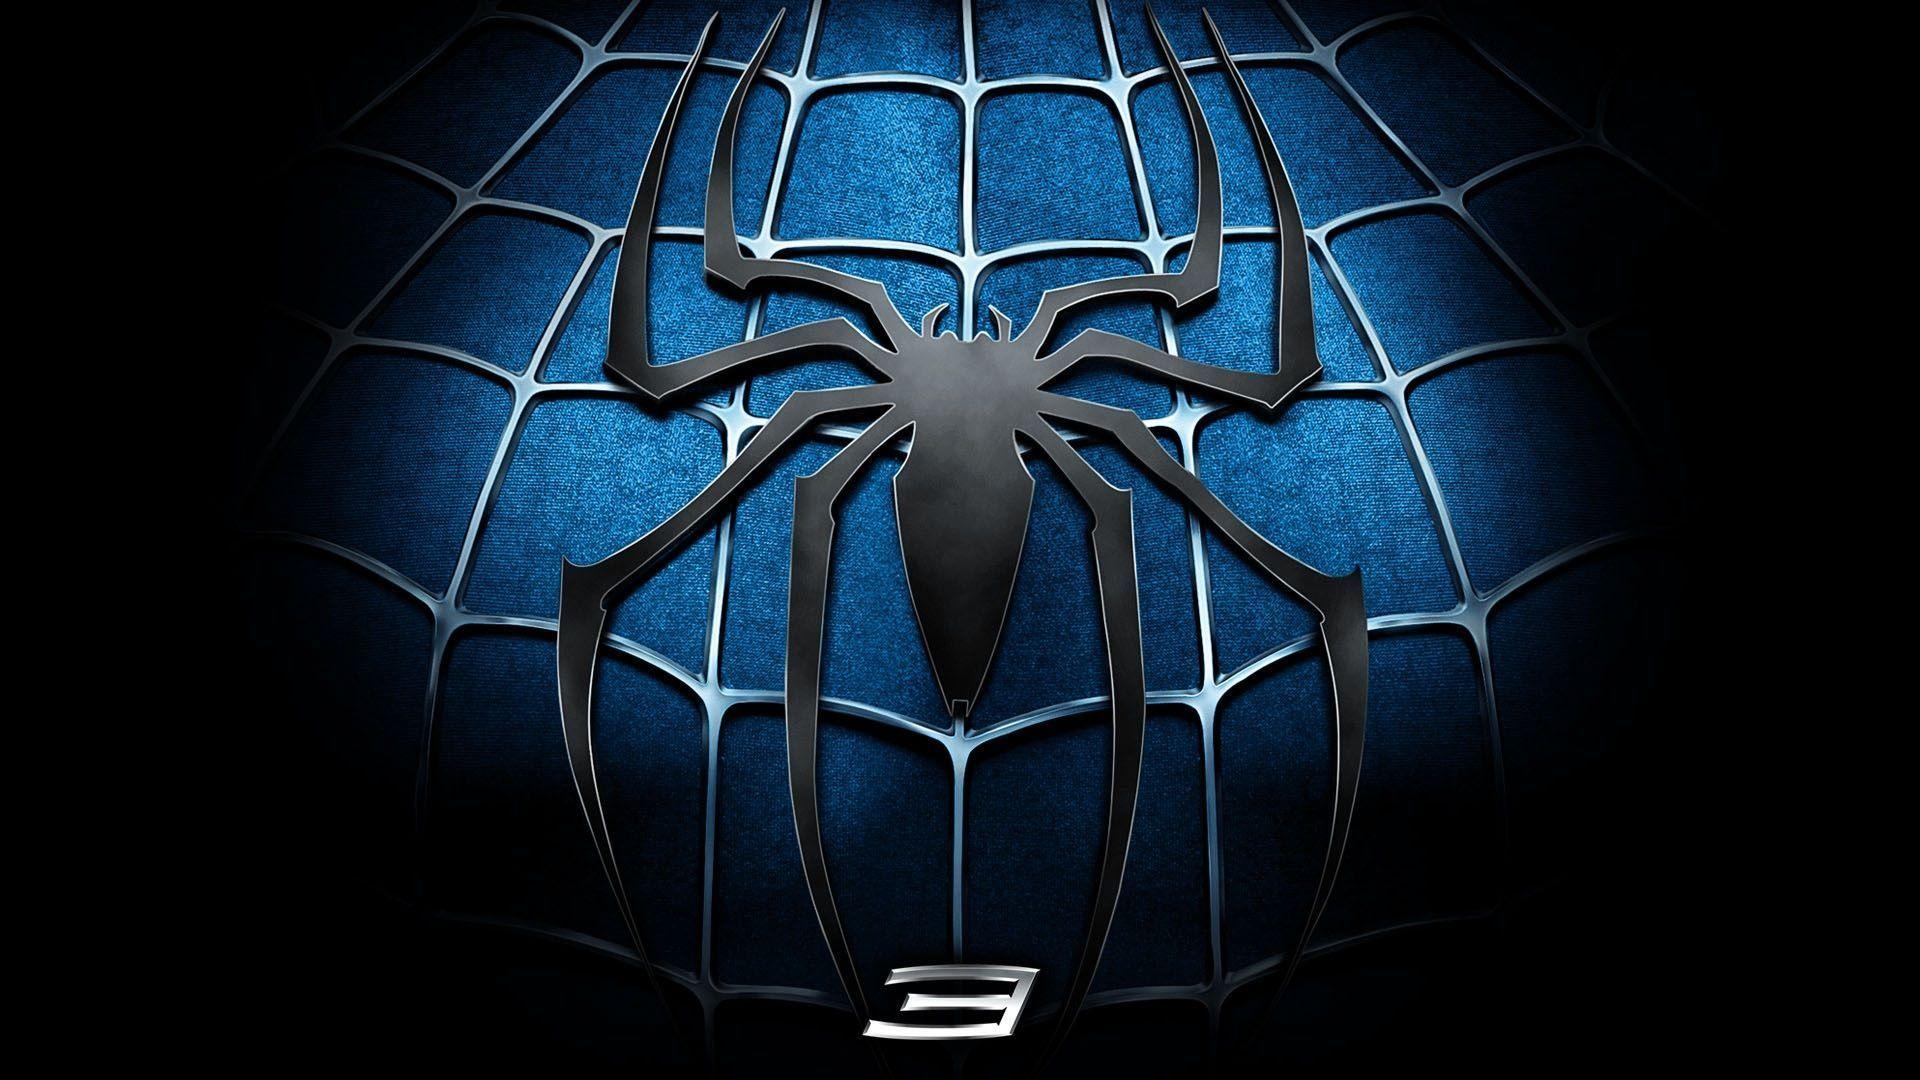 Spider man phone wallpaper hd 1080p